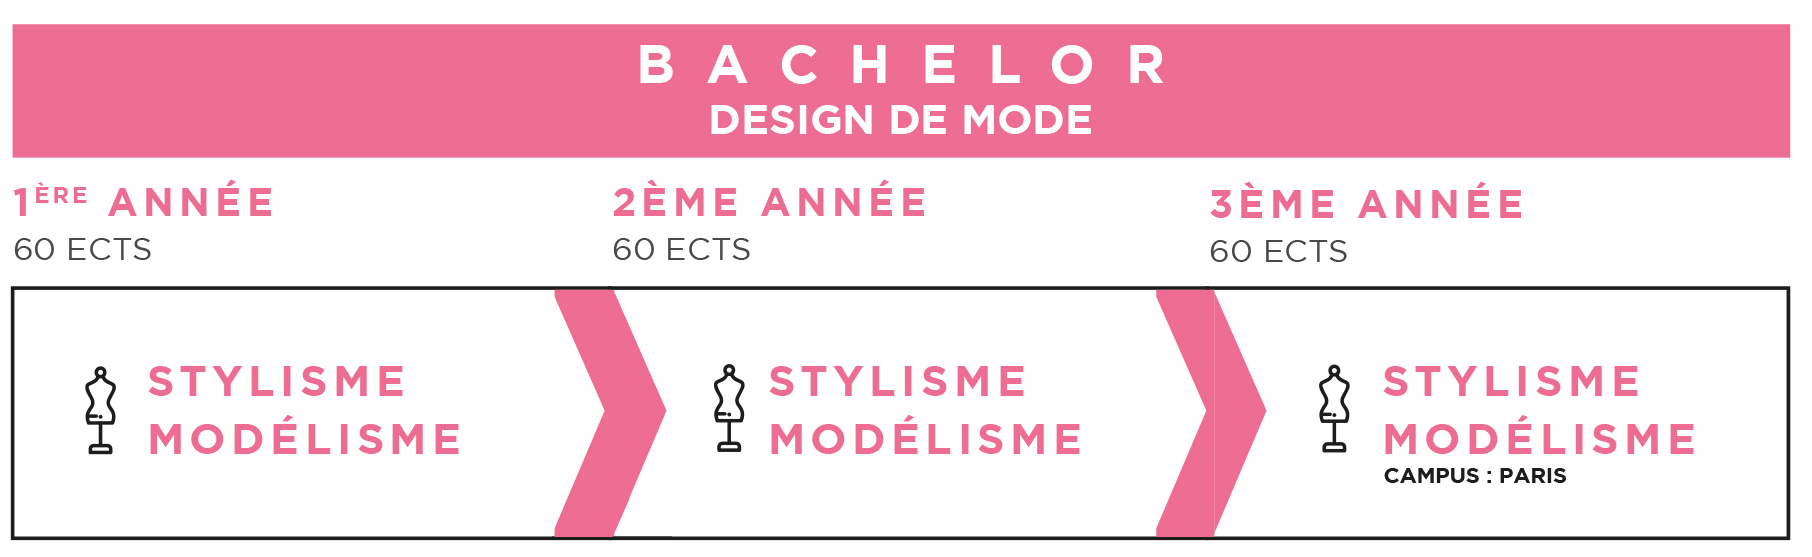 bachelor design de mode